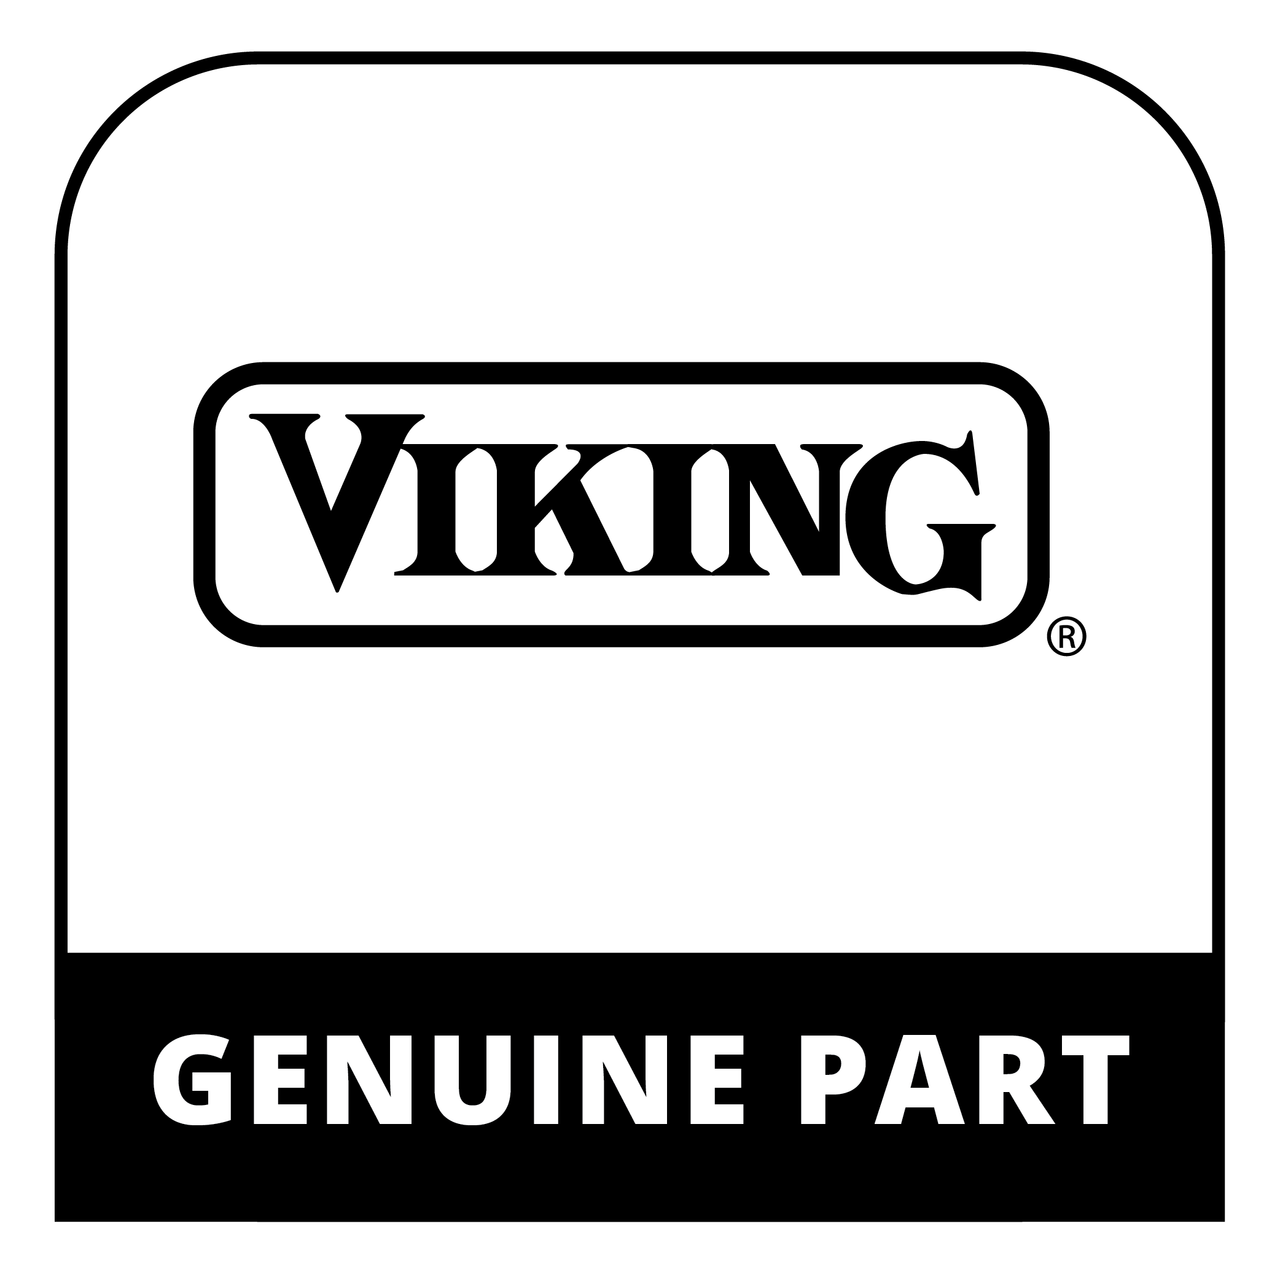 Viking 060459-000 - FAN, COVER, 24" 7 SERIES - Genuine Viking Part